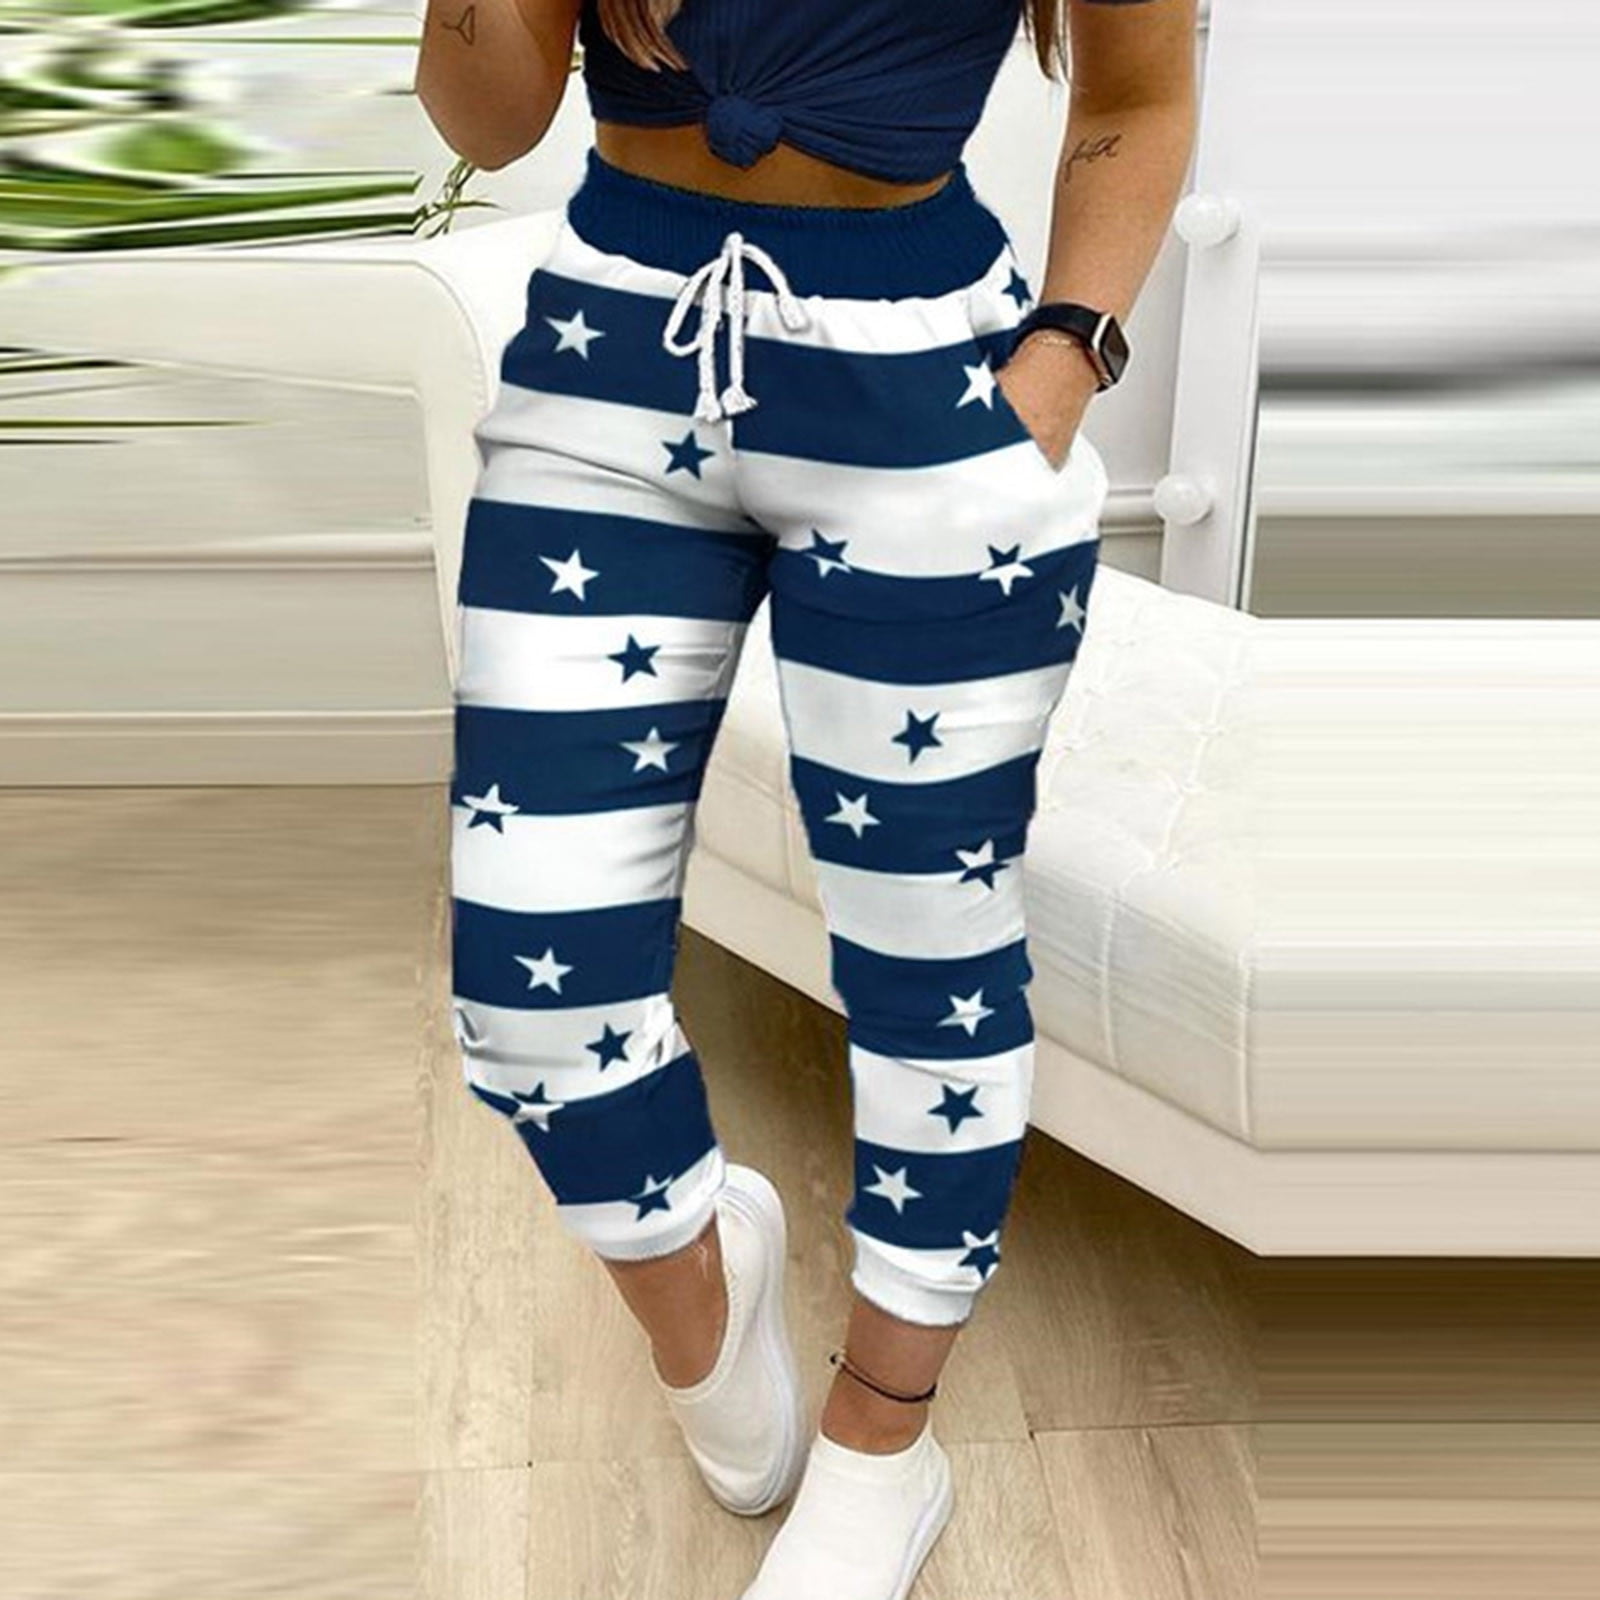 DAETIROS Athletic Works Women Pants Fashion Stripe Tie-Dye Printing  Elasticity Drawstring Lacing Pokets Splicing Casual Pants Trousers Daily  Navy Size M 